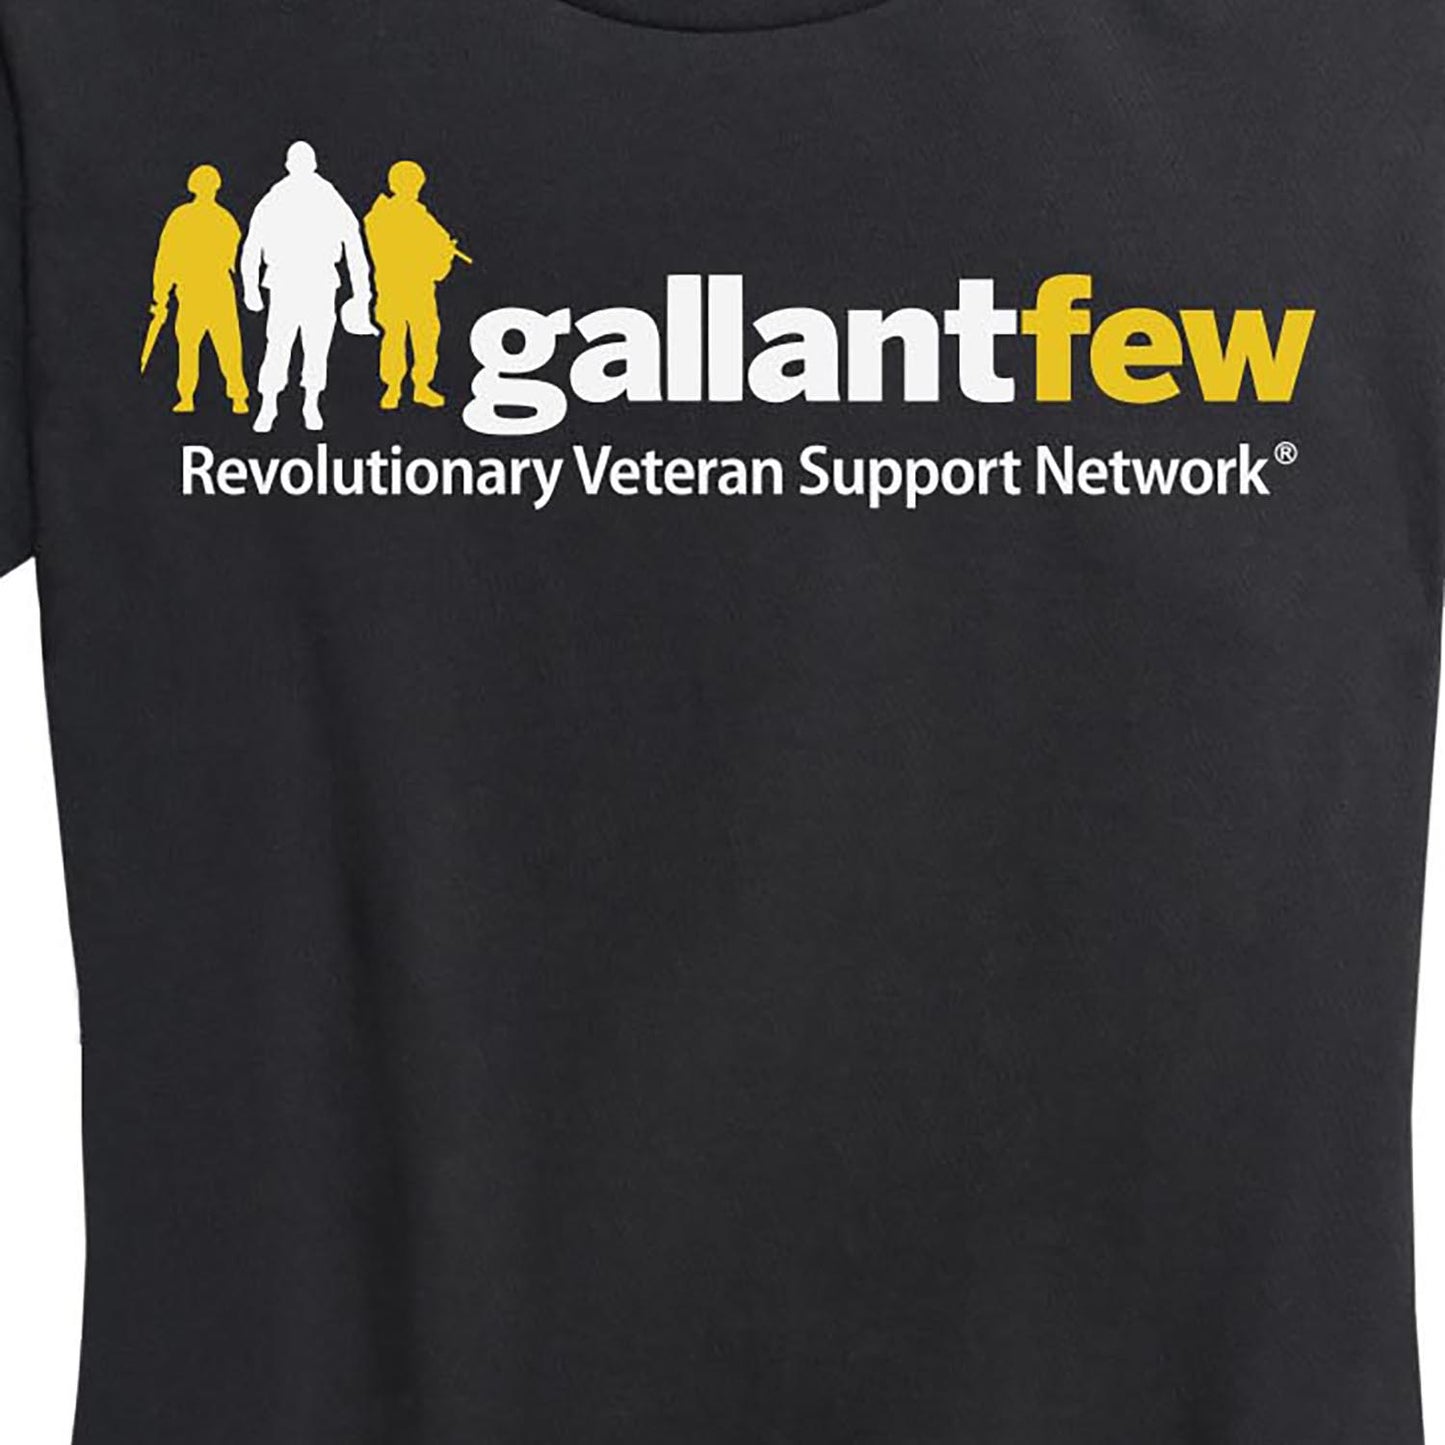 Women's GallantFew Logo Tee